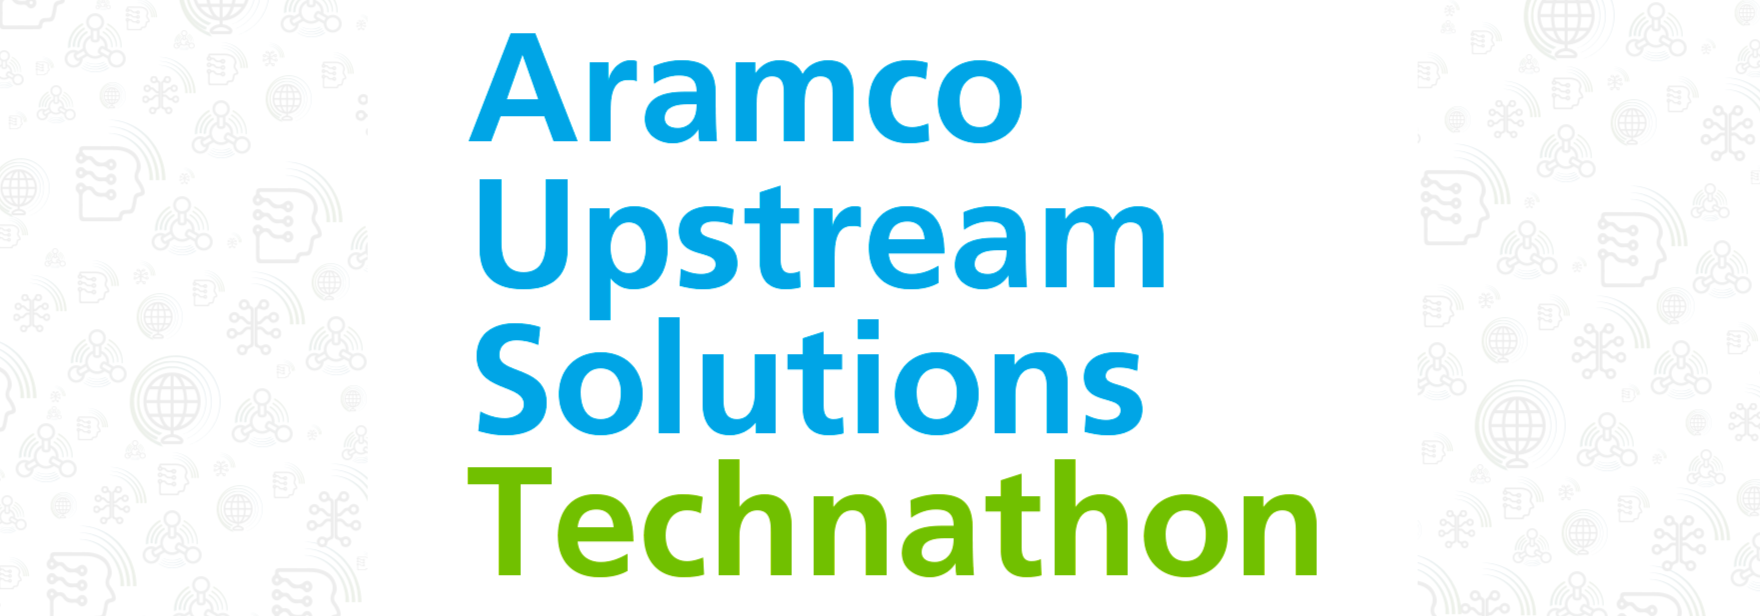 Обложка курса Aramco Upstream Solutions Technathon 2020